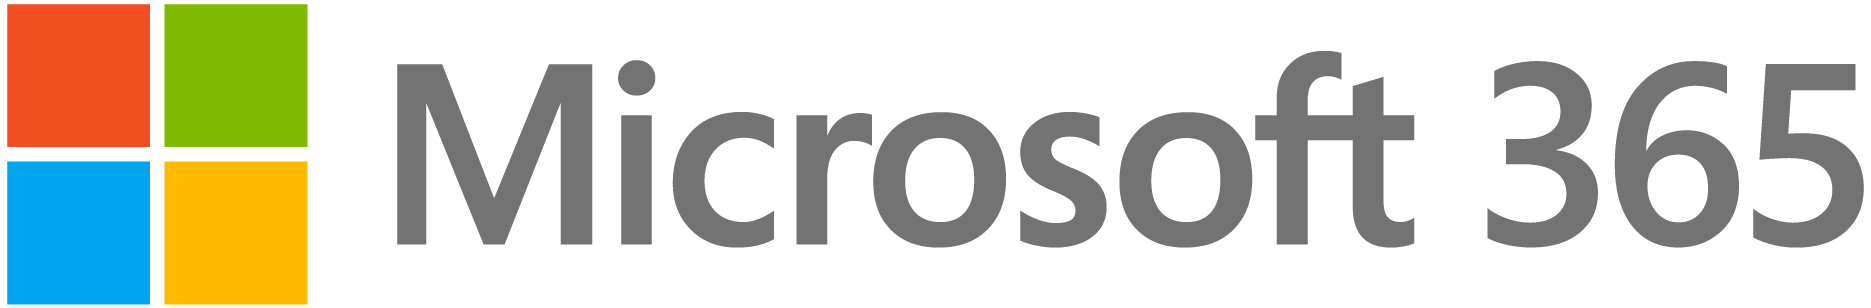 Microsoft_365_logo-png-1